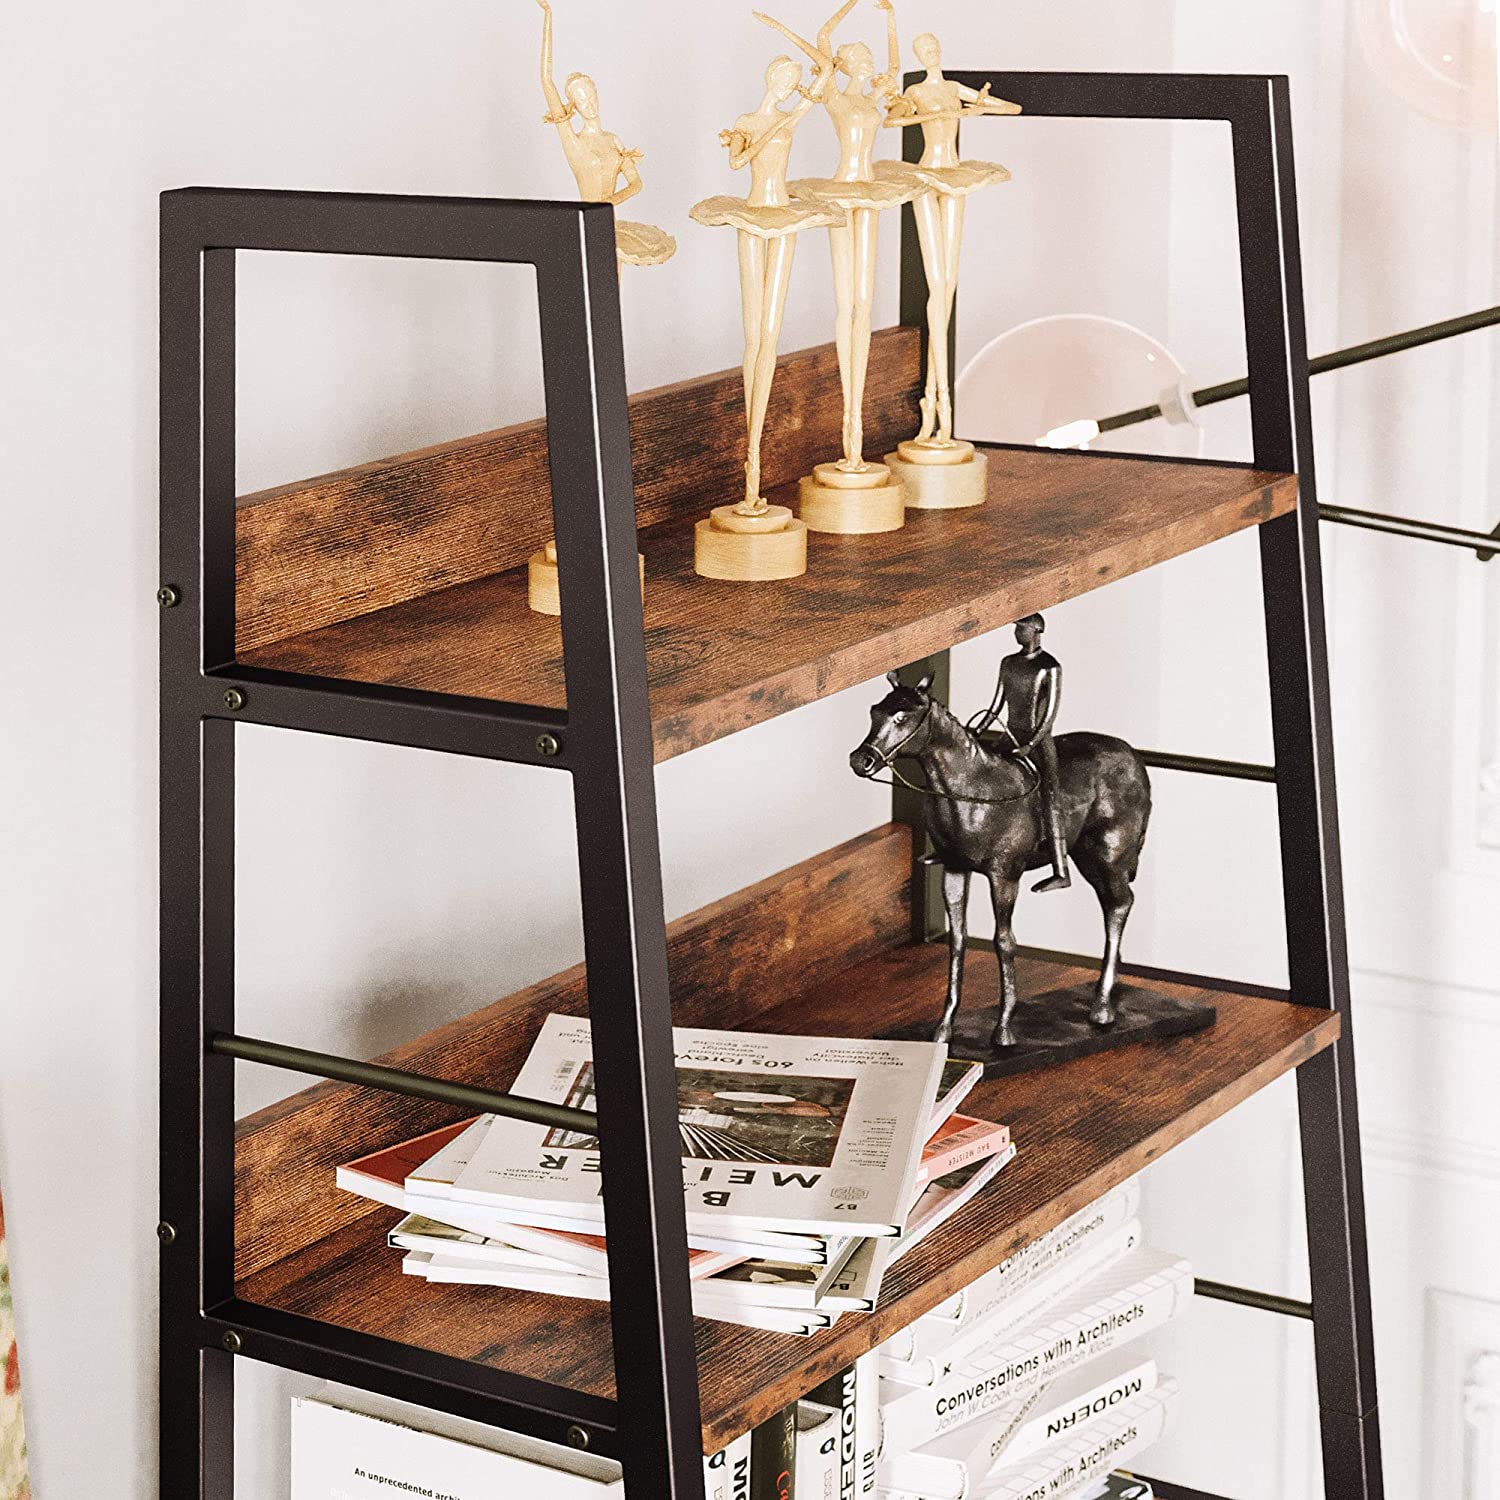 Ktaxon 4 Tier Metal Leaning Ladder Shelf Bookcase Bookshelf Storage Shelves  Unit Black